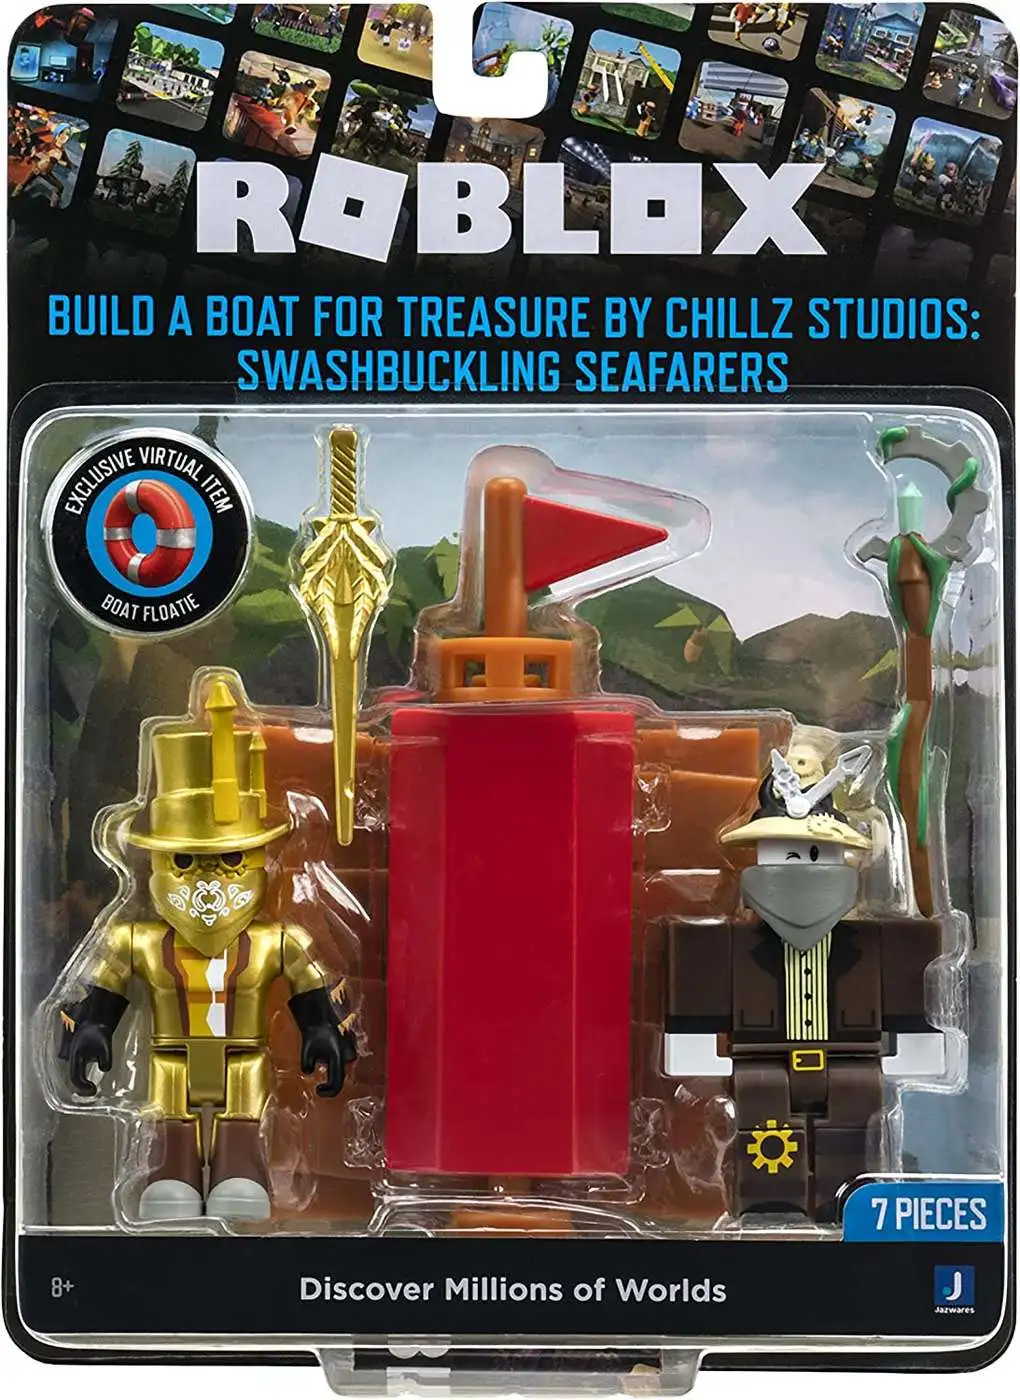 Compre Roblox - 2 Figuras de 7cm - Swashbuckling Seafarers aqui na Sunny  Brinquedos.